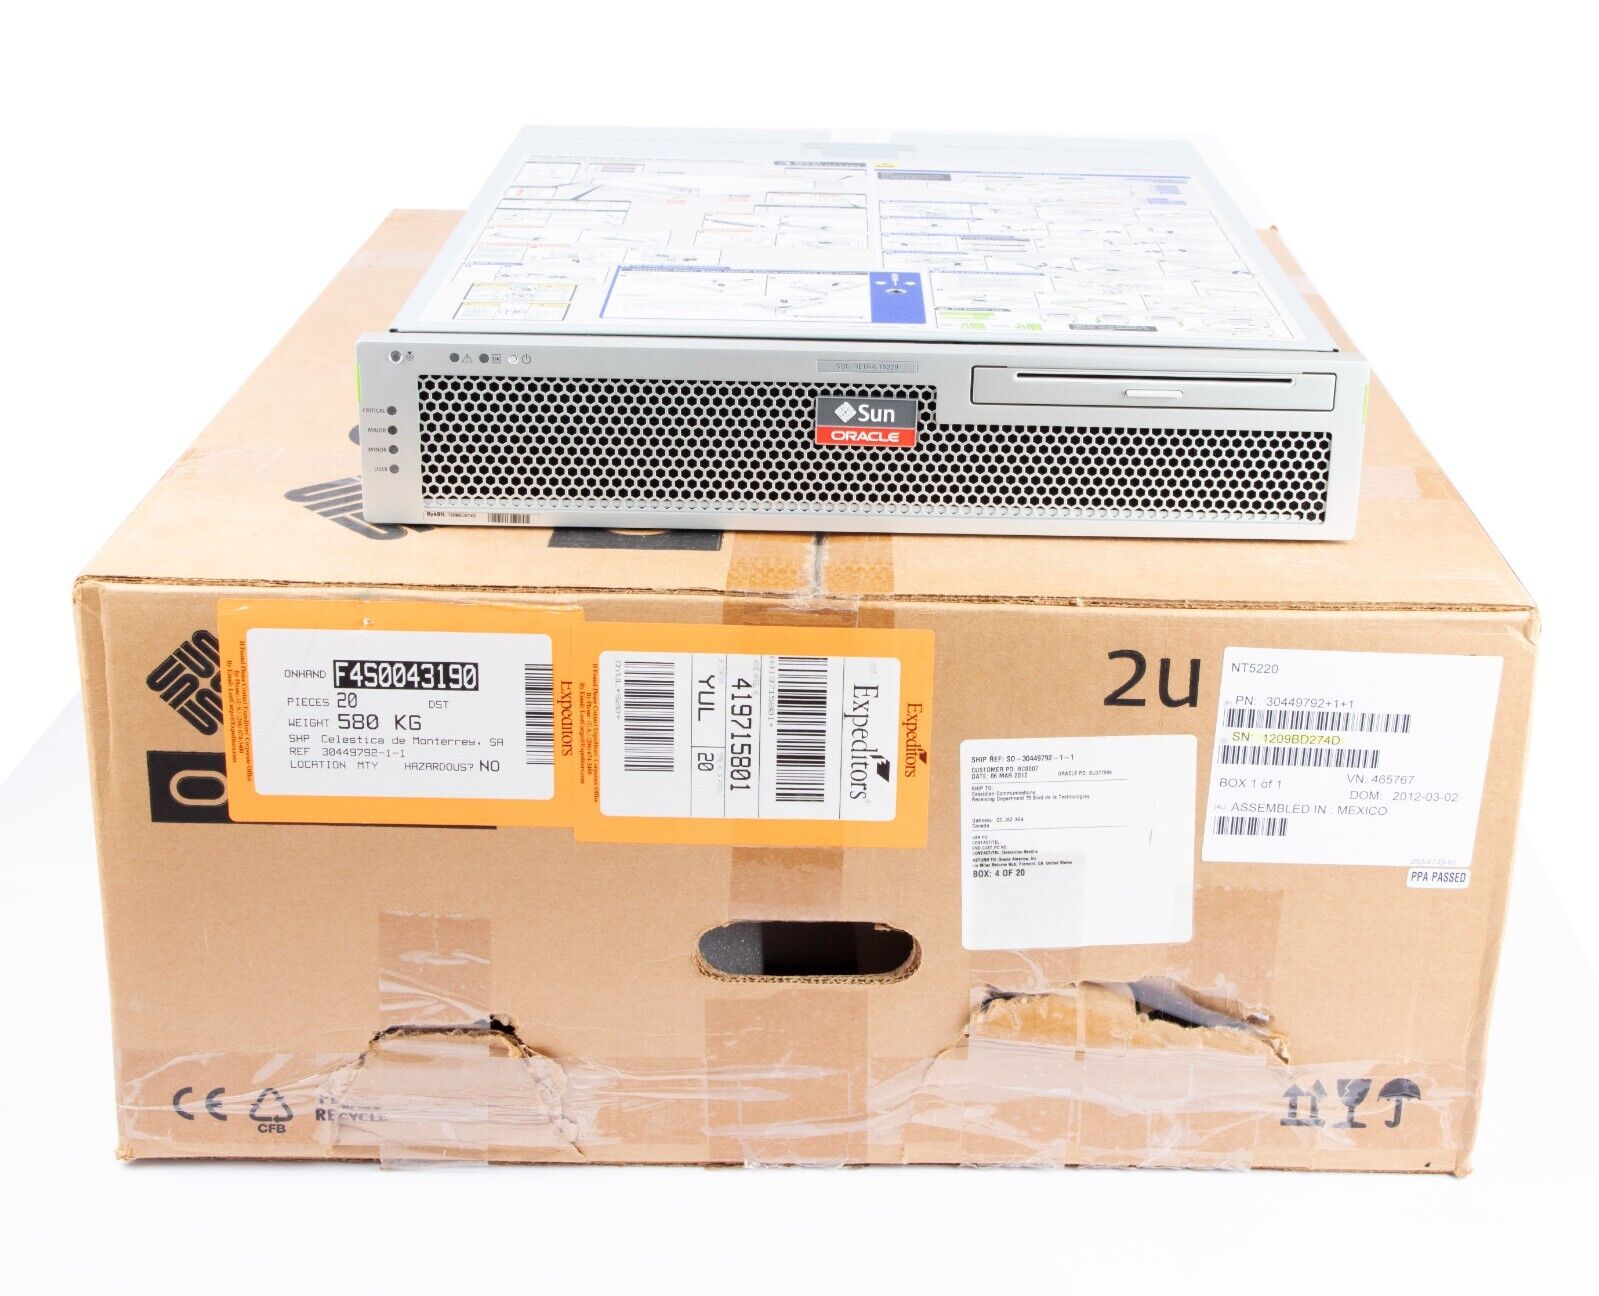 NEW Sun Netra T5220 SPARC Enterprise Server, 1.2GHz, 8-Core, 8GB RAM, 2PS, 2 HDD